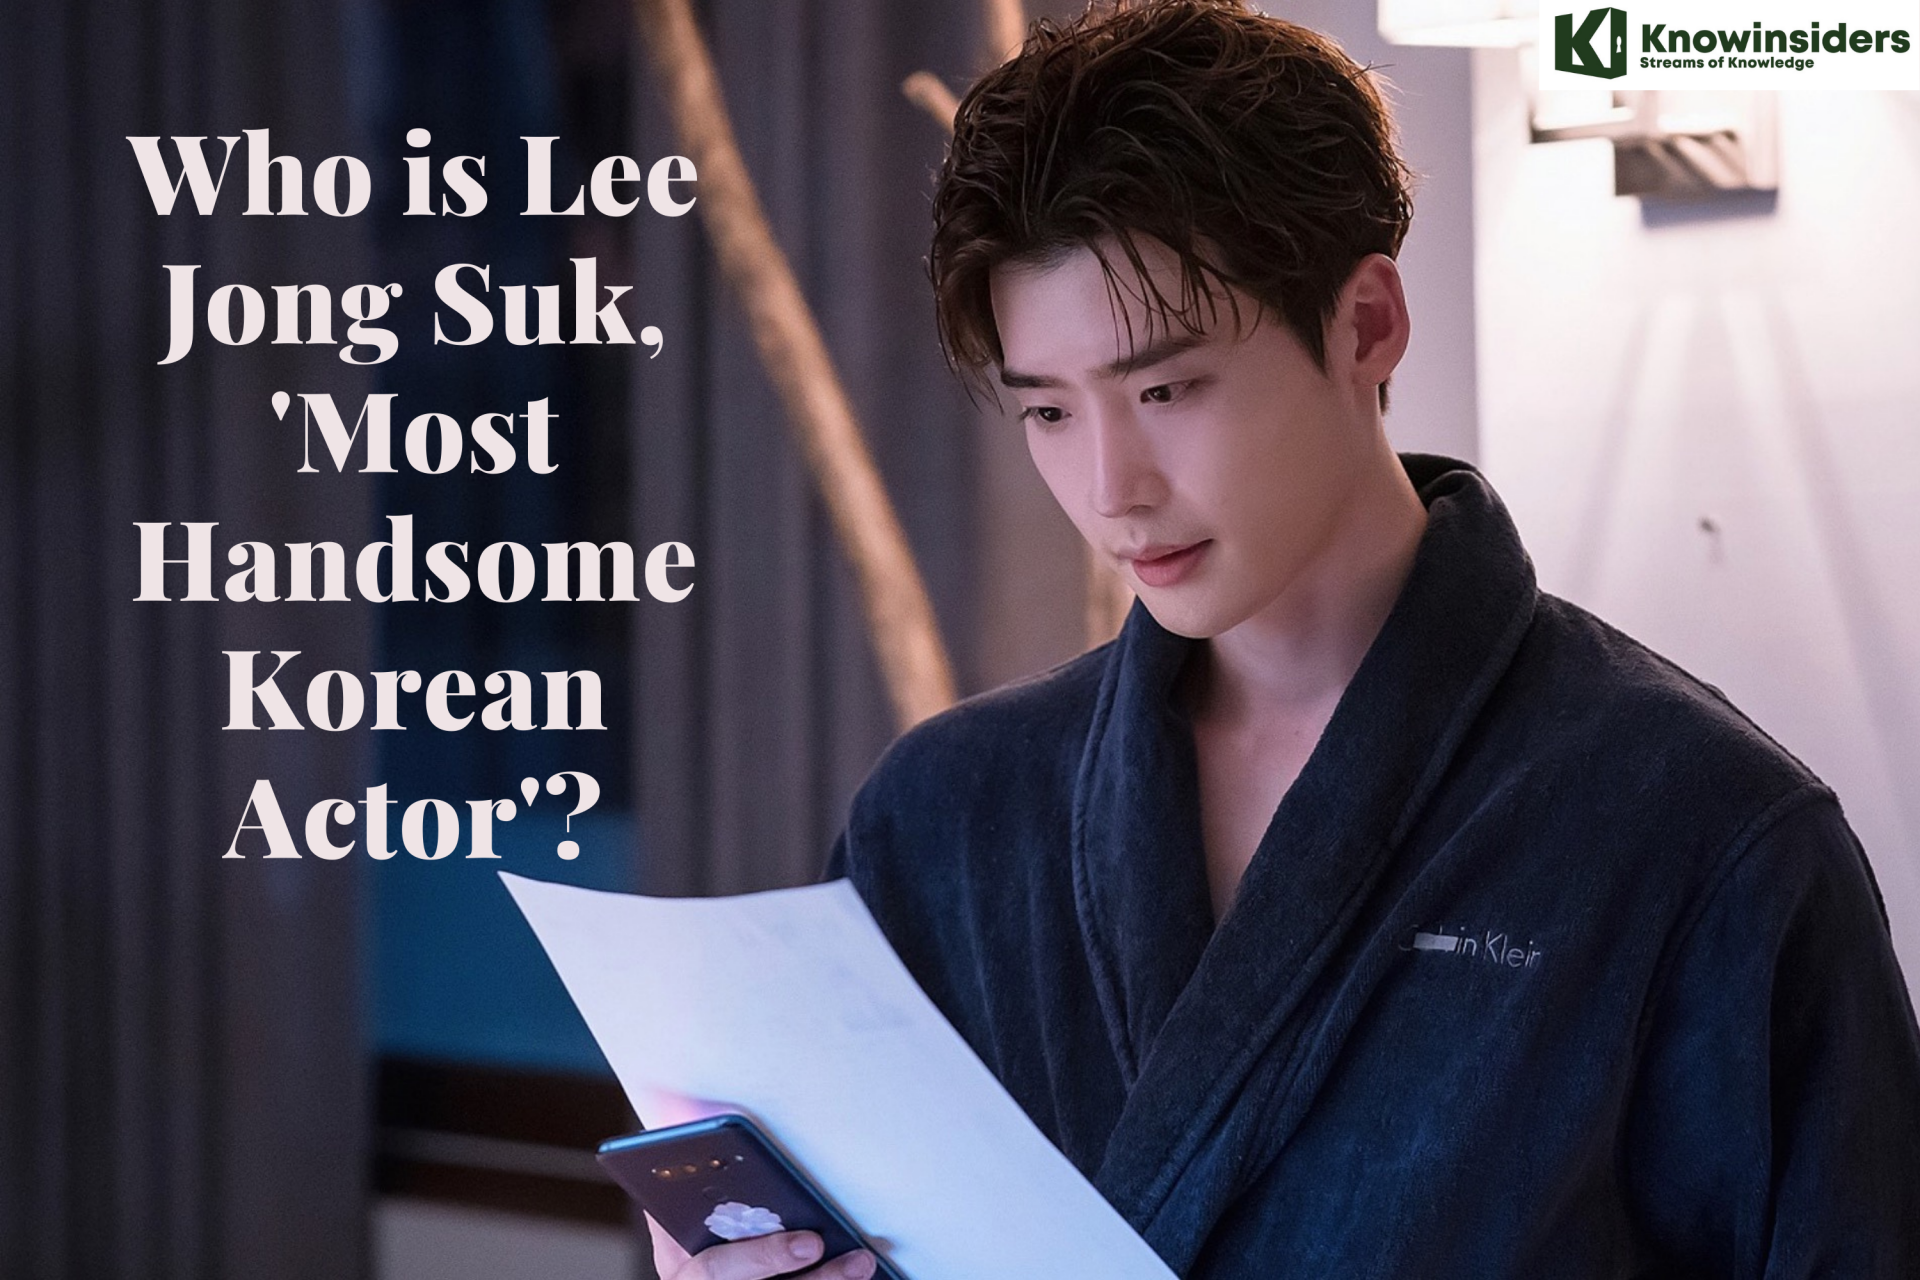 who is lee jong suk most handsome korean actor surpassed hyun bin lee min ho and song joong ki